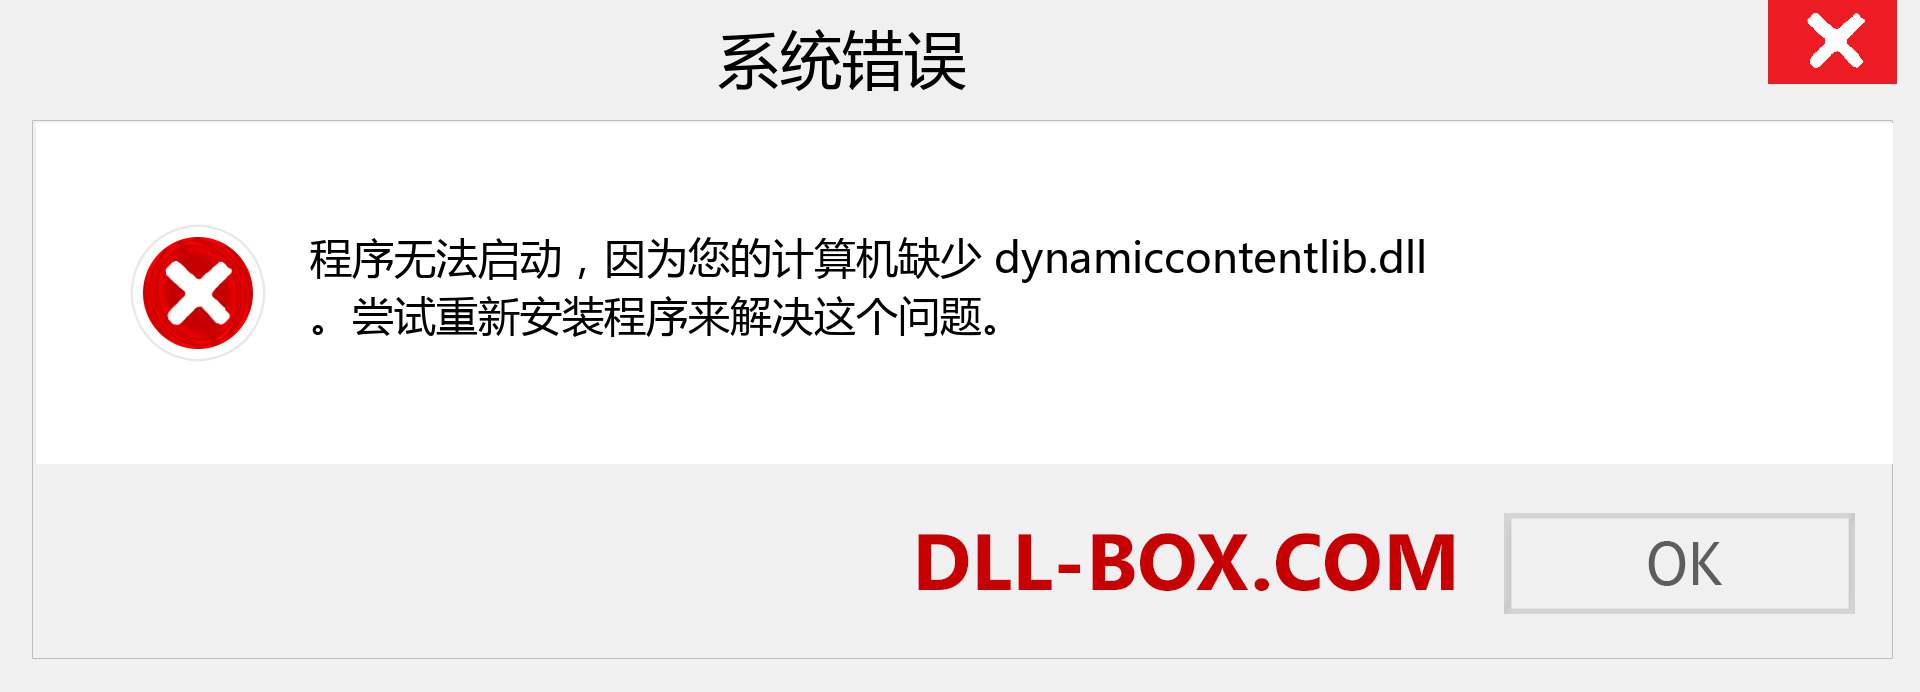 dynamiccontentlib.dll 文件丢失？。 适用于 Windows 7、8、10 的下载 - 修复 Windows、照片、图像上的 dynamiccontentlib dll 丢失错误